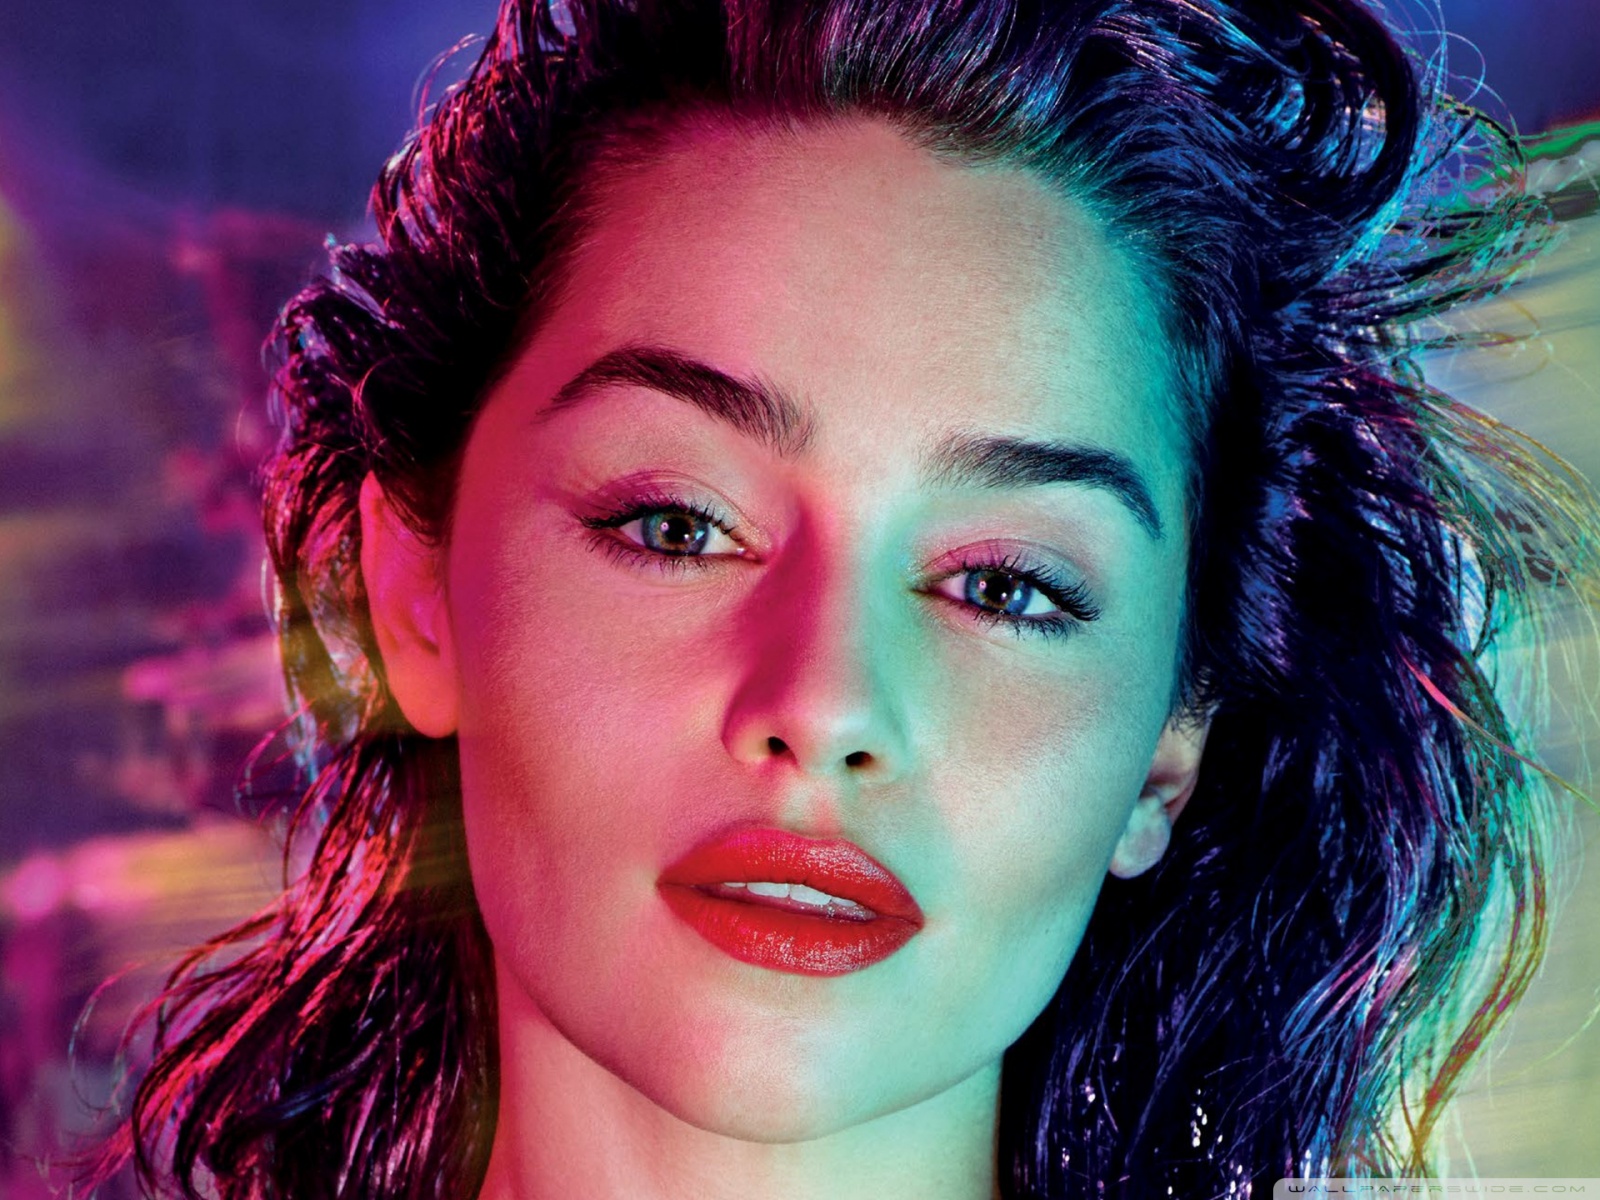 Emilia Clarke 2020 Photoshoot Wallpapers